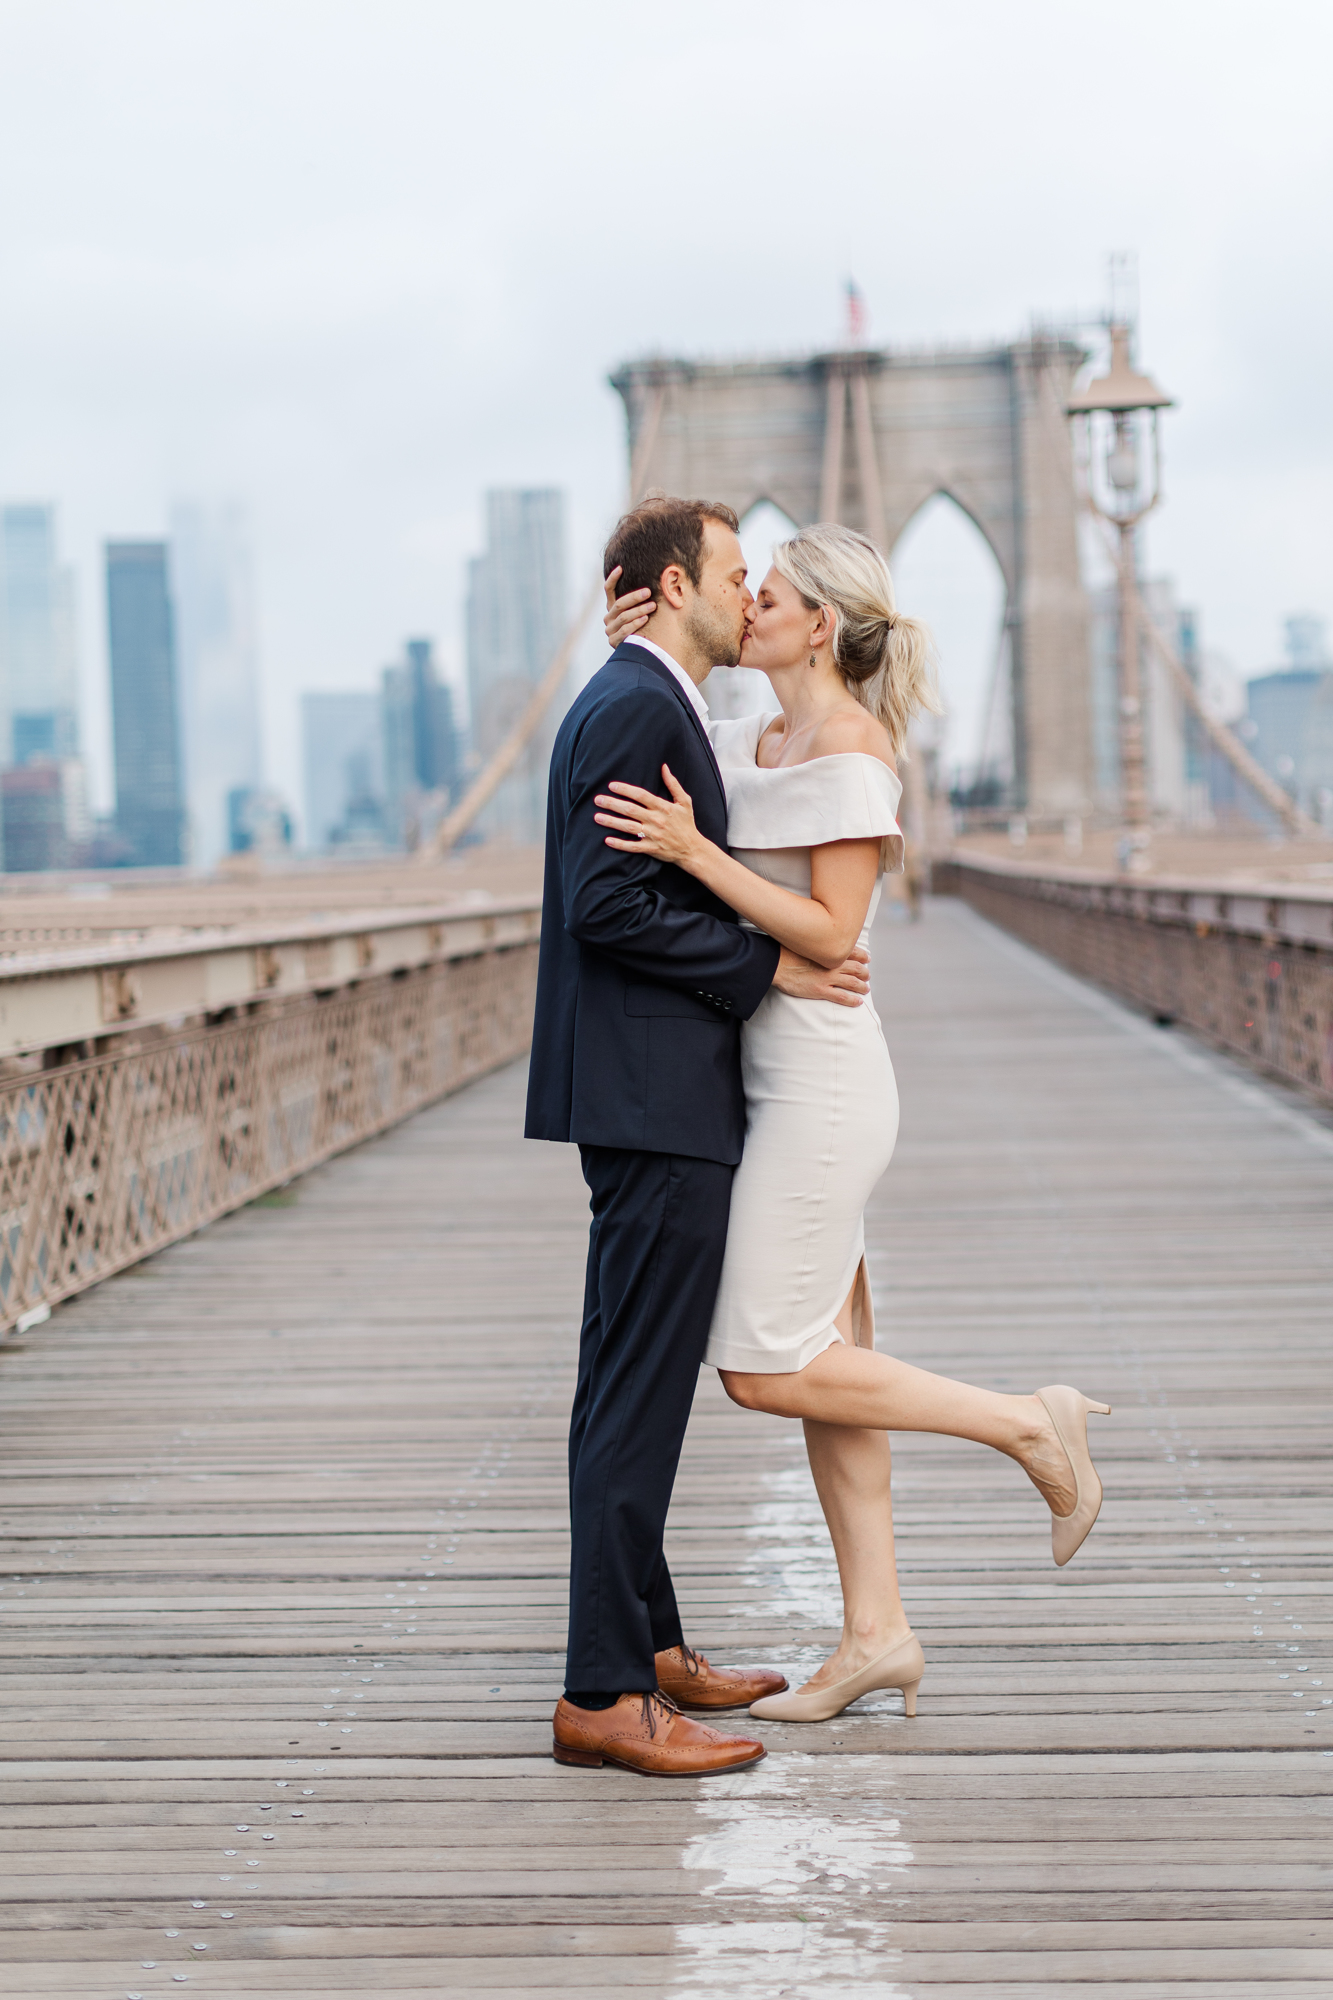 Intimate New York Engagement Photos on the Brooklyn Bridge